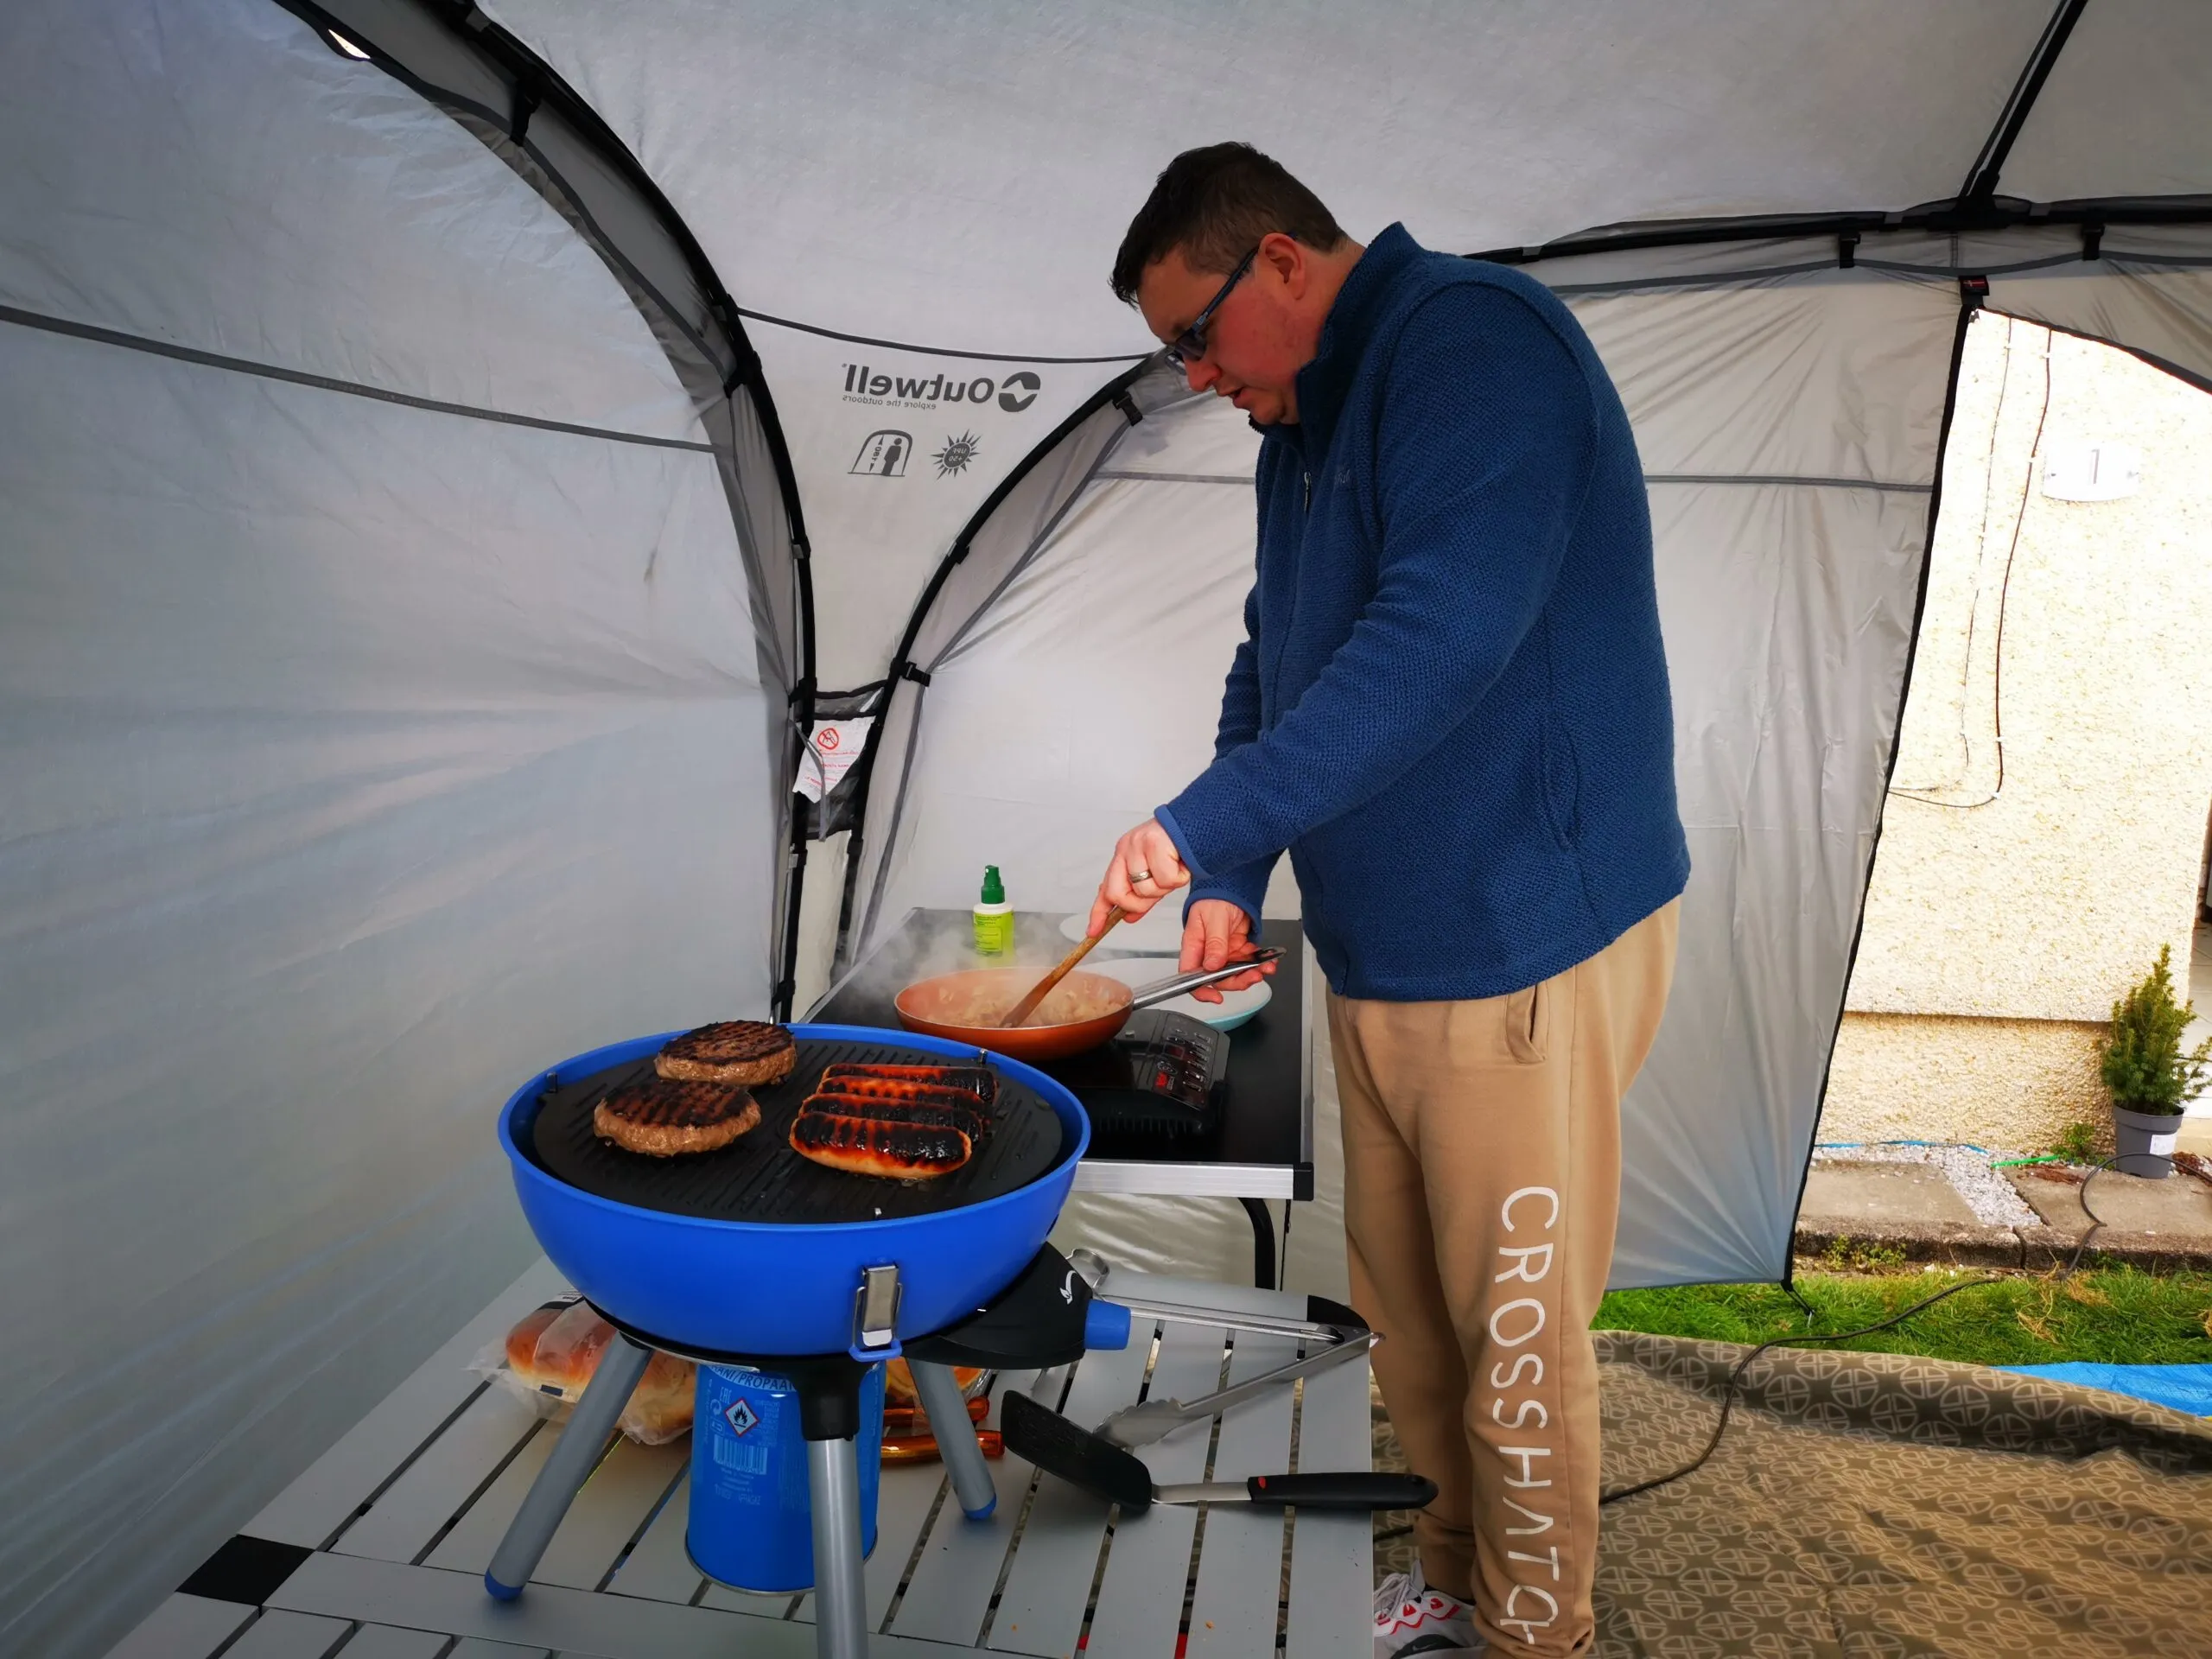 editors review the campingaz party grill 400 cv